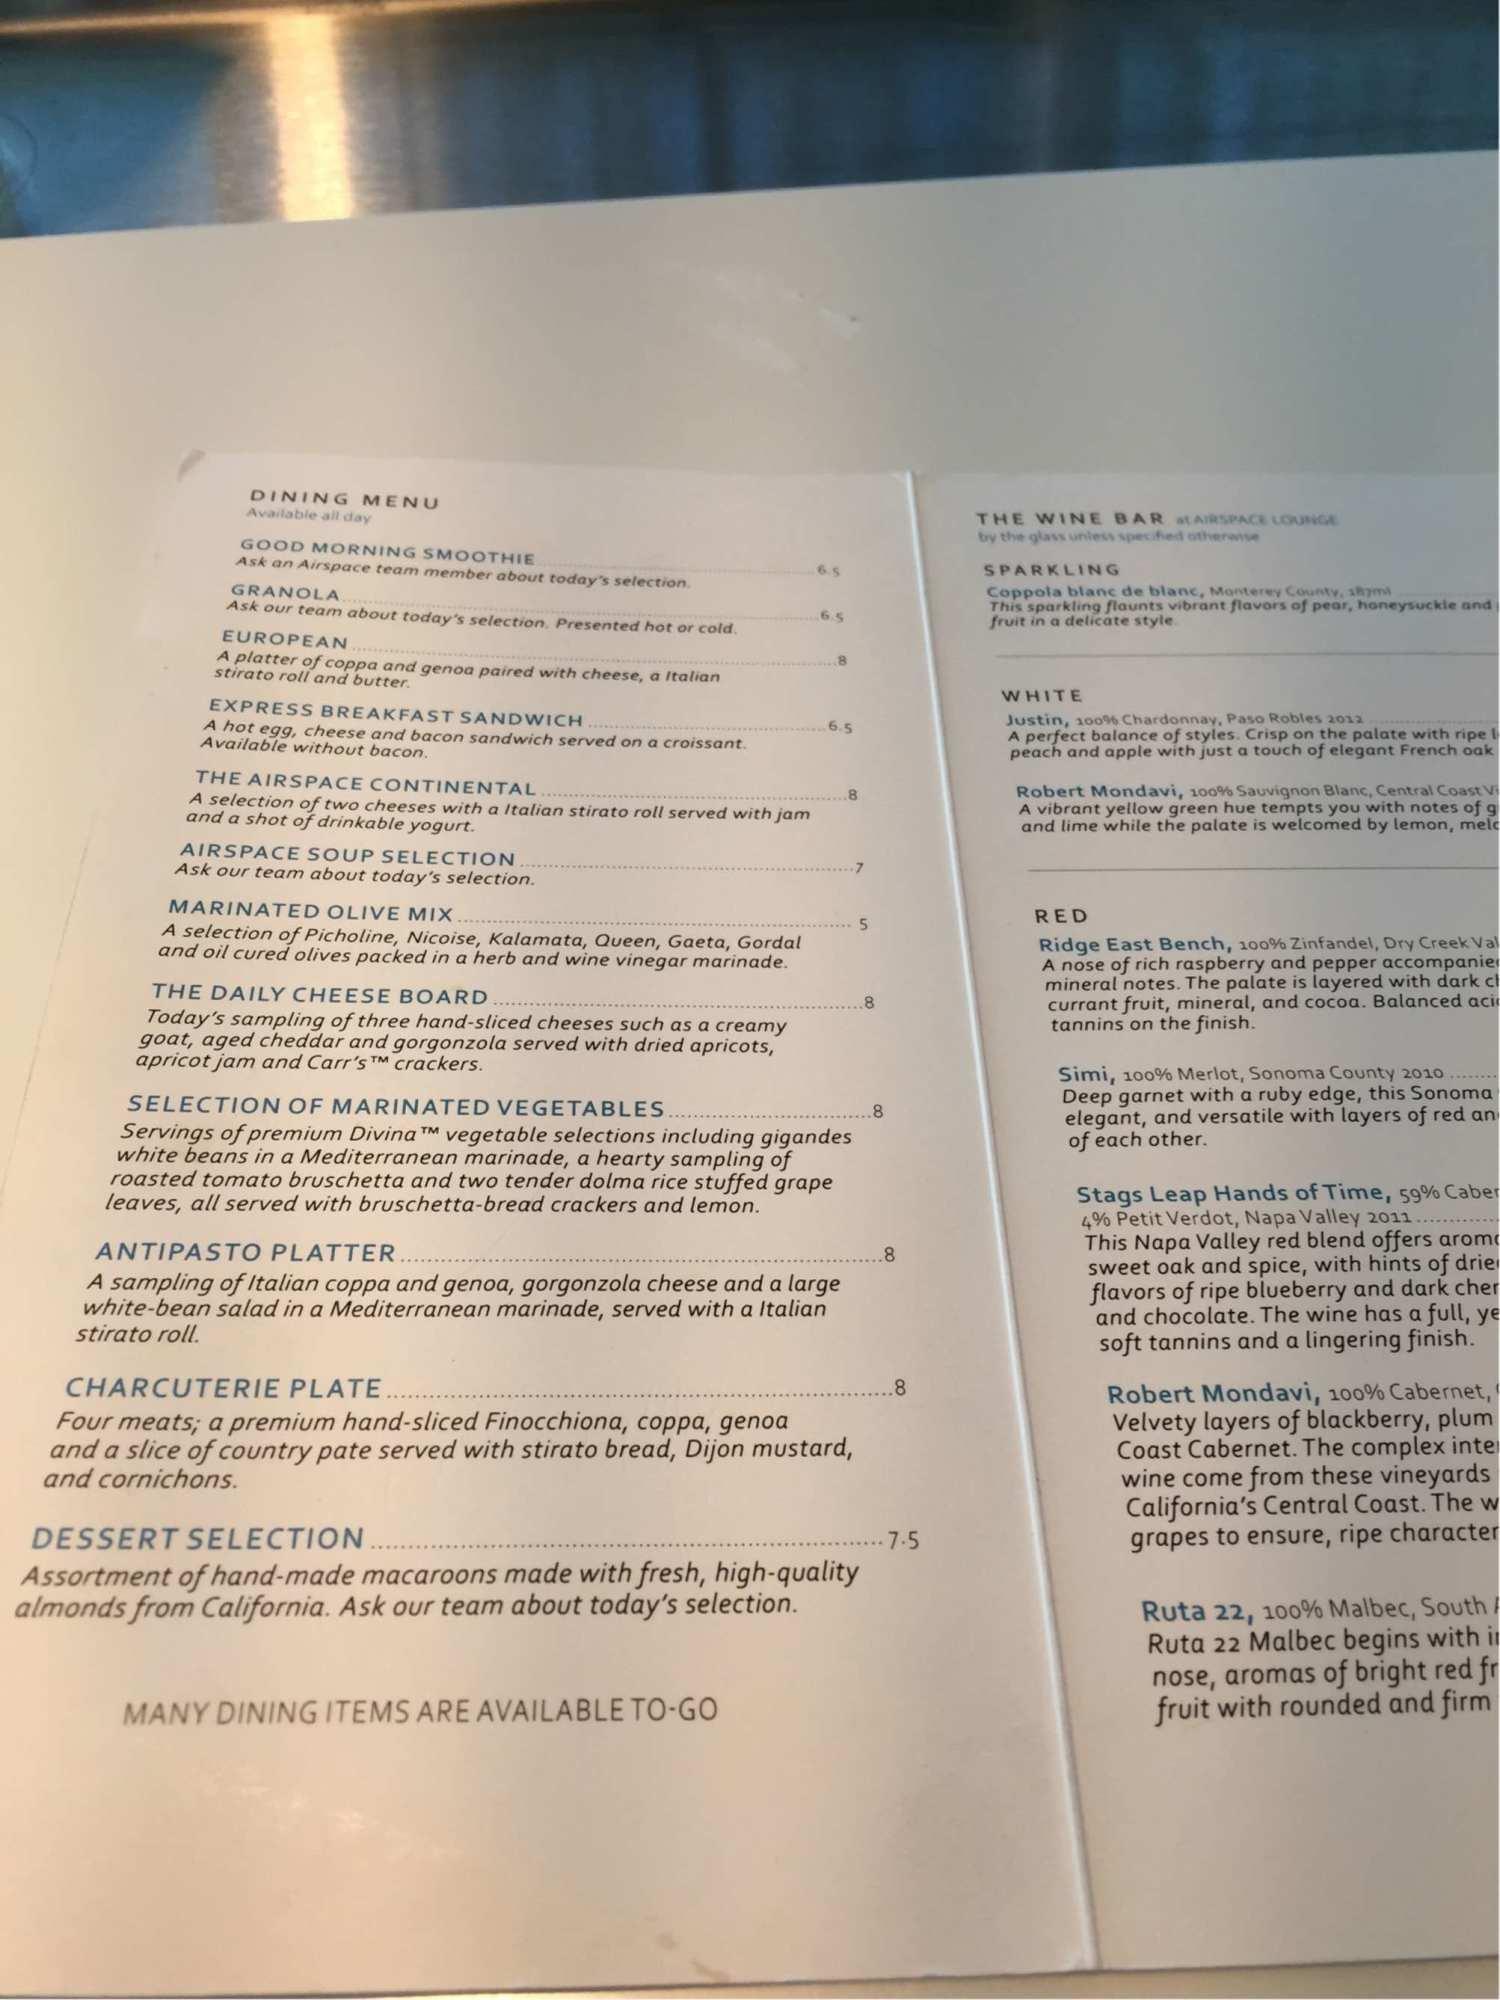 aria in room dining menu